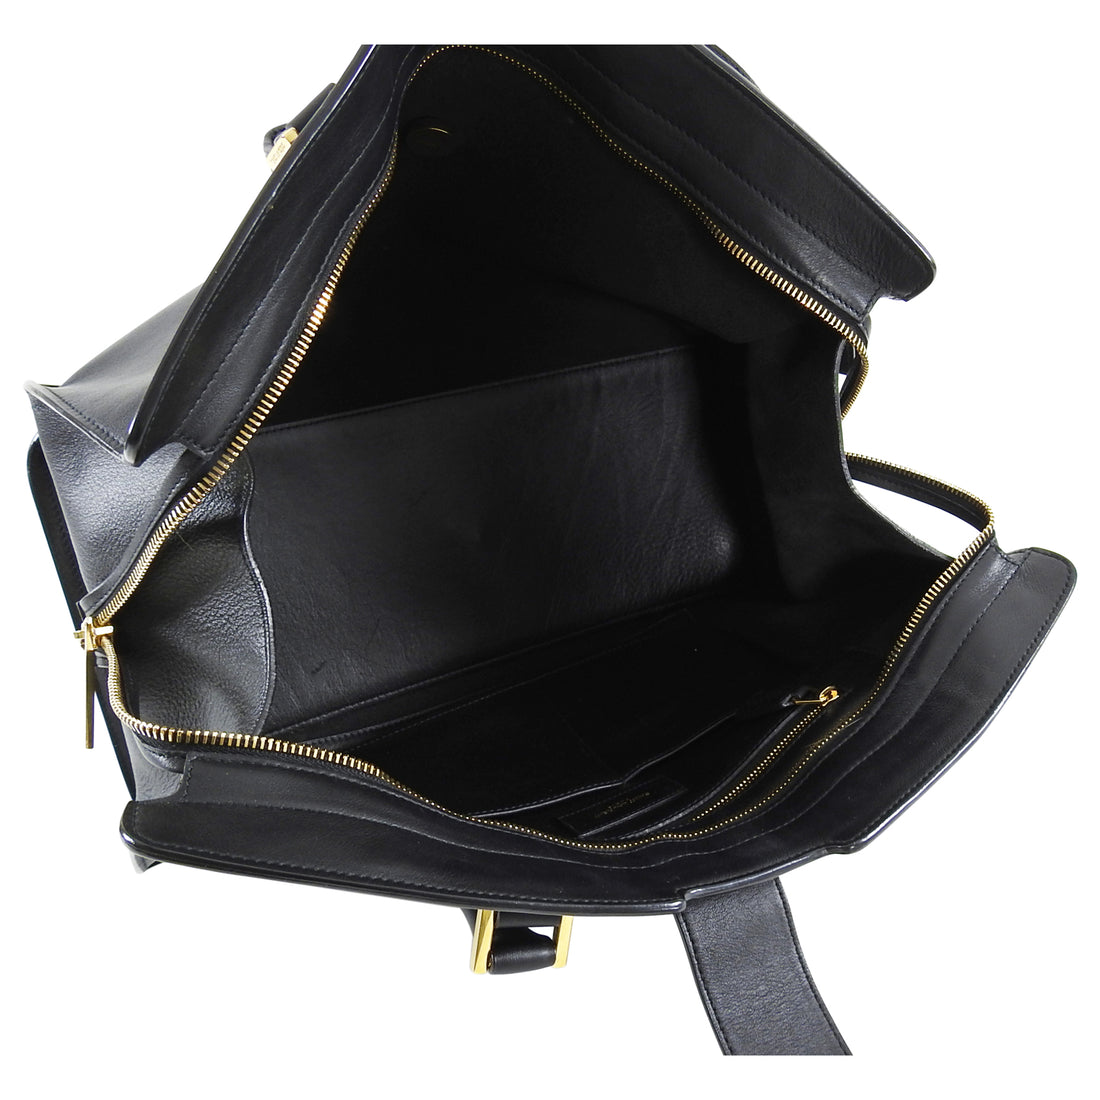 Saint Laurent Cabas Chyc Medium Black Leather Y Bag